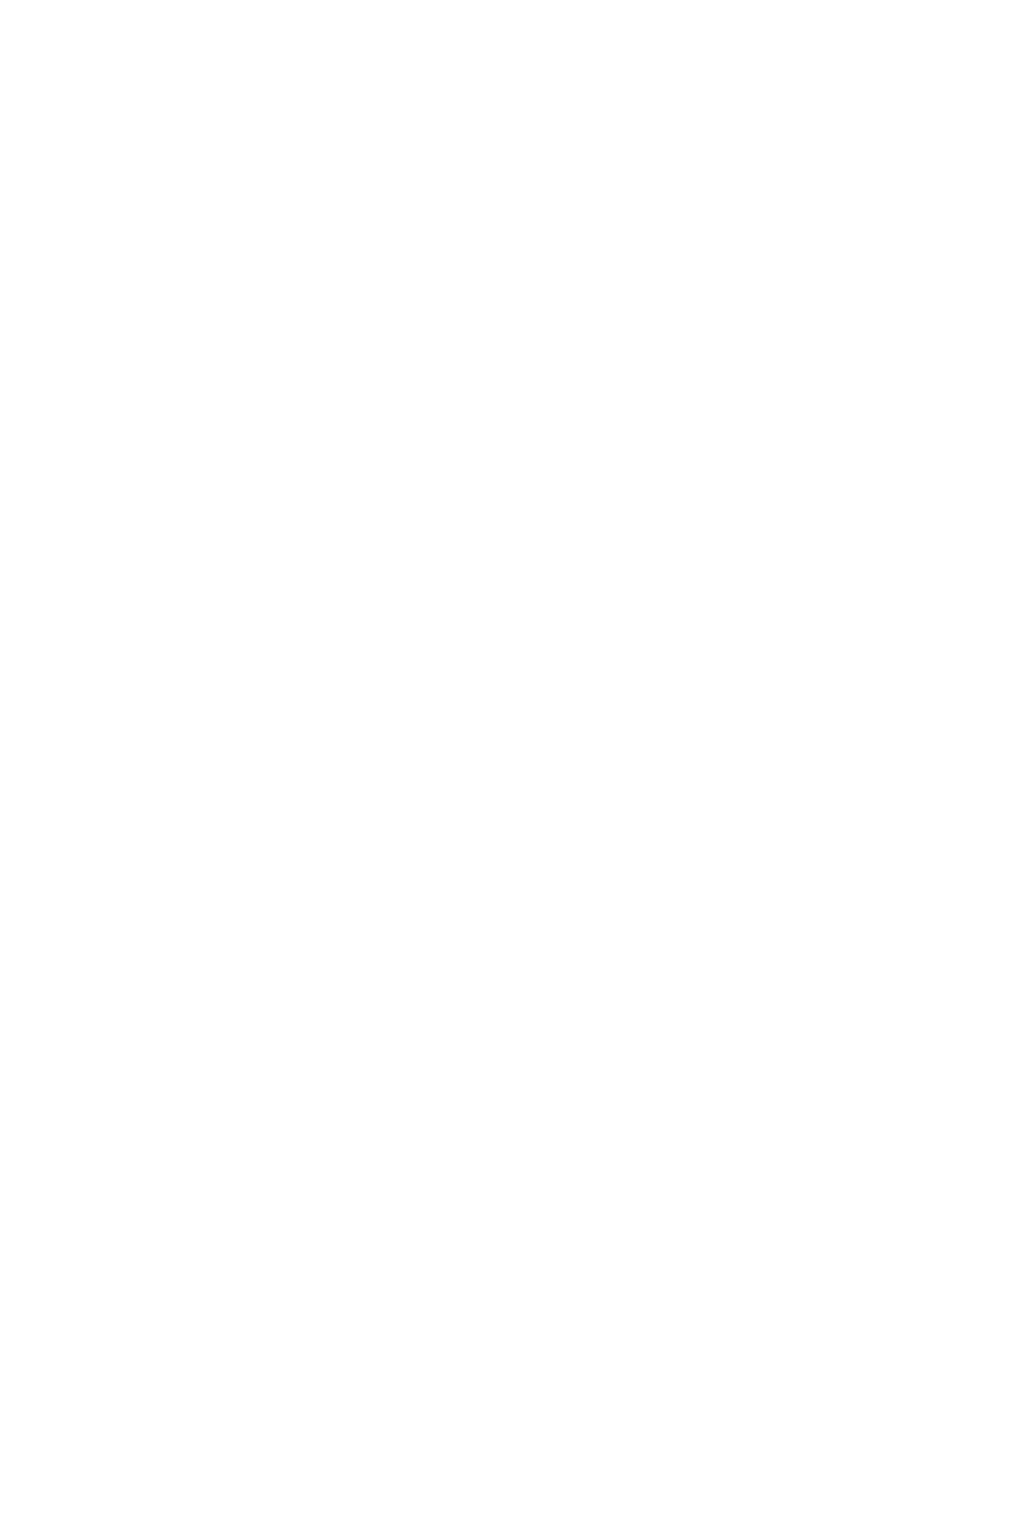 Hydrofarm logo for dark backgrounds (transparent PNG)